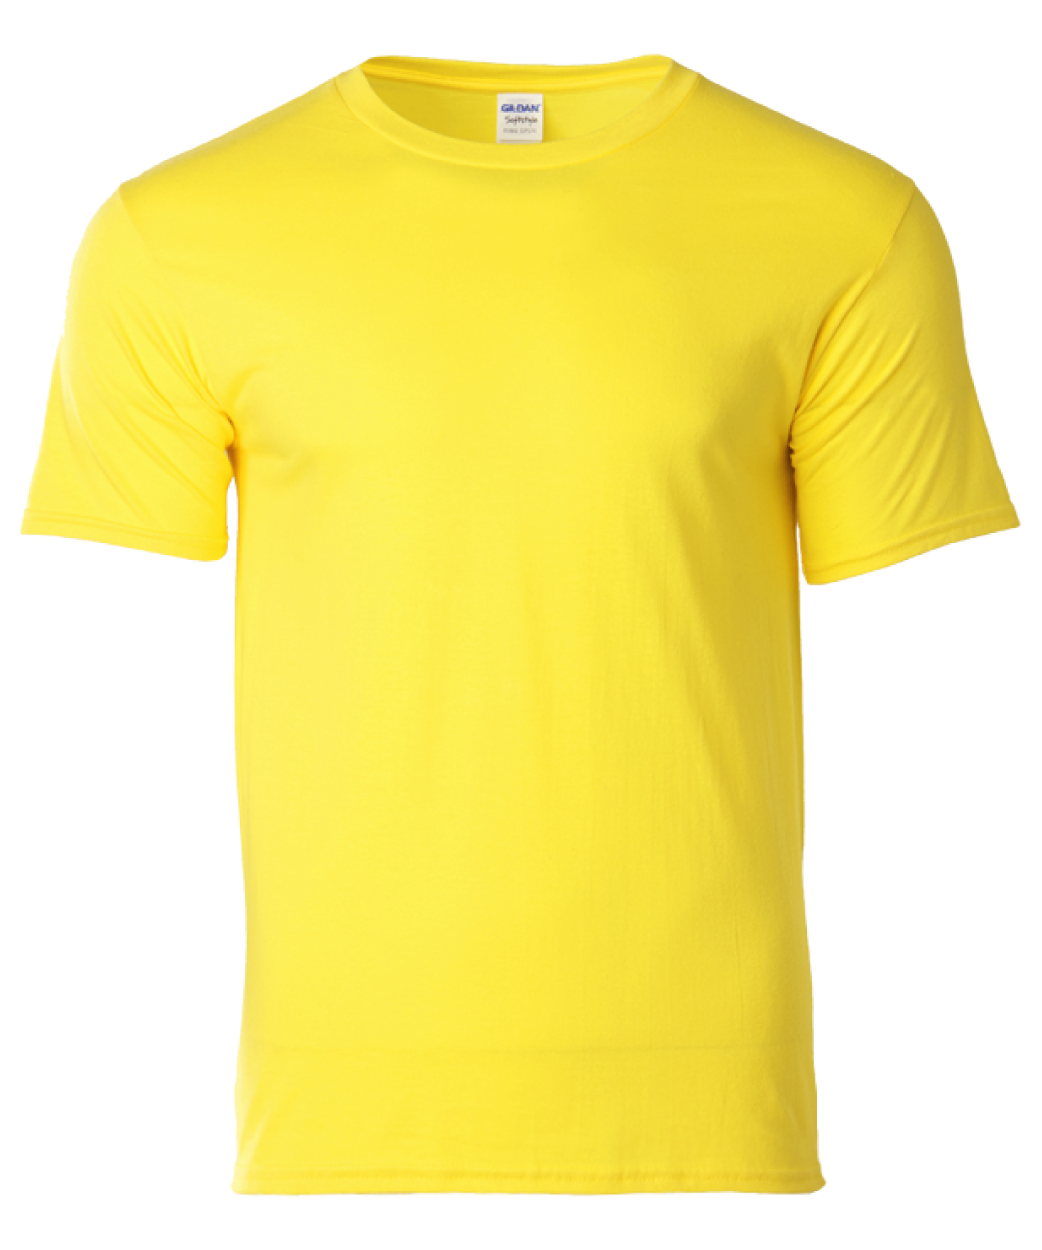 GILDAN Softstyle 63000 150GSM Cotton Unisex T-Shirt Best Men Women Adult Plain Cotton Soft Round Neck T-Shirt Solid Tee Group B DAISY/CORNSILK/LIME/IRISH GREEN/NAVY/SAPPHIRE/ROYAL 63000